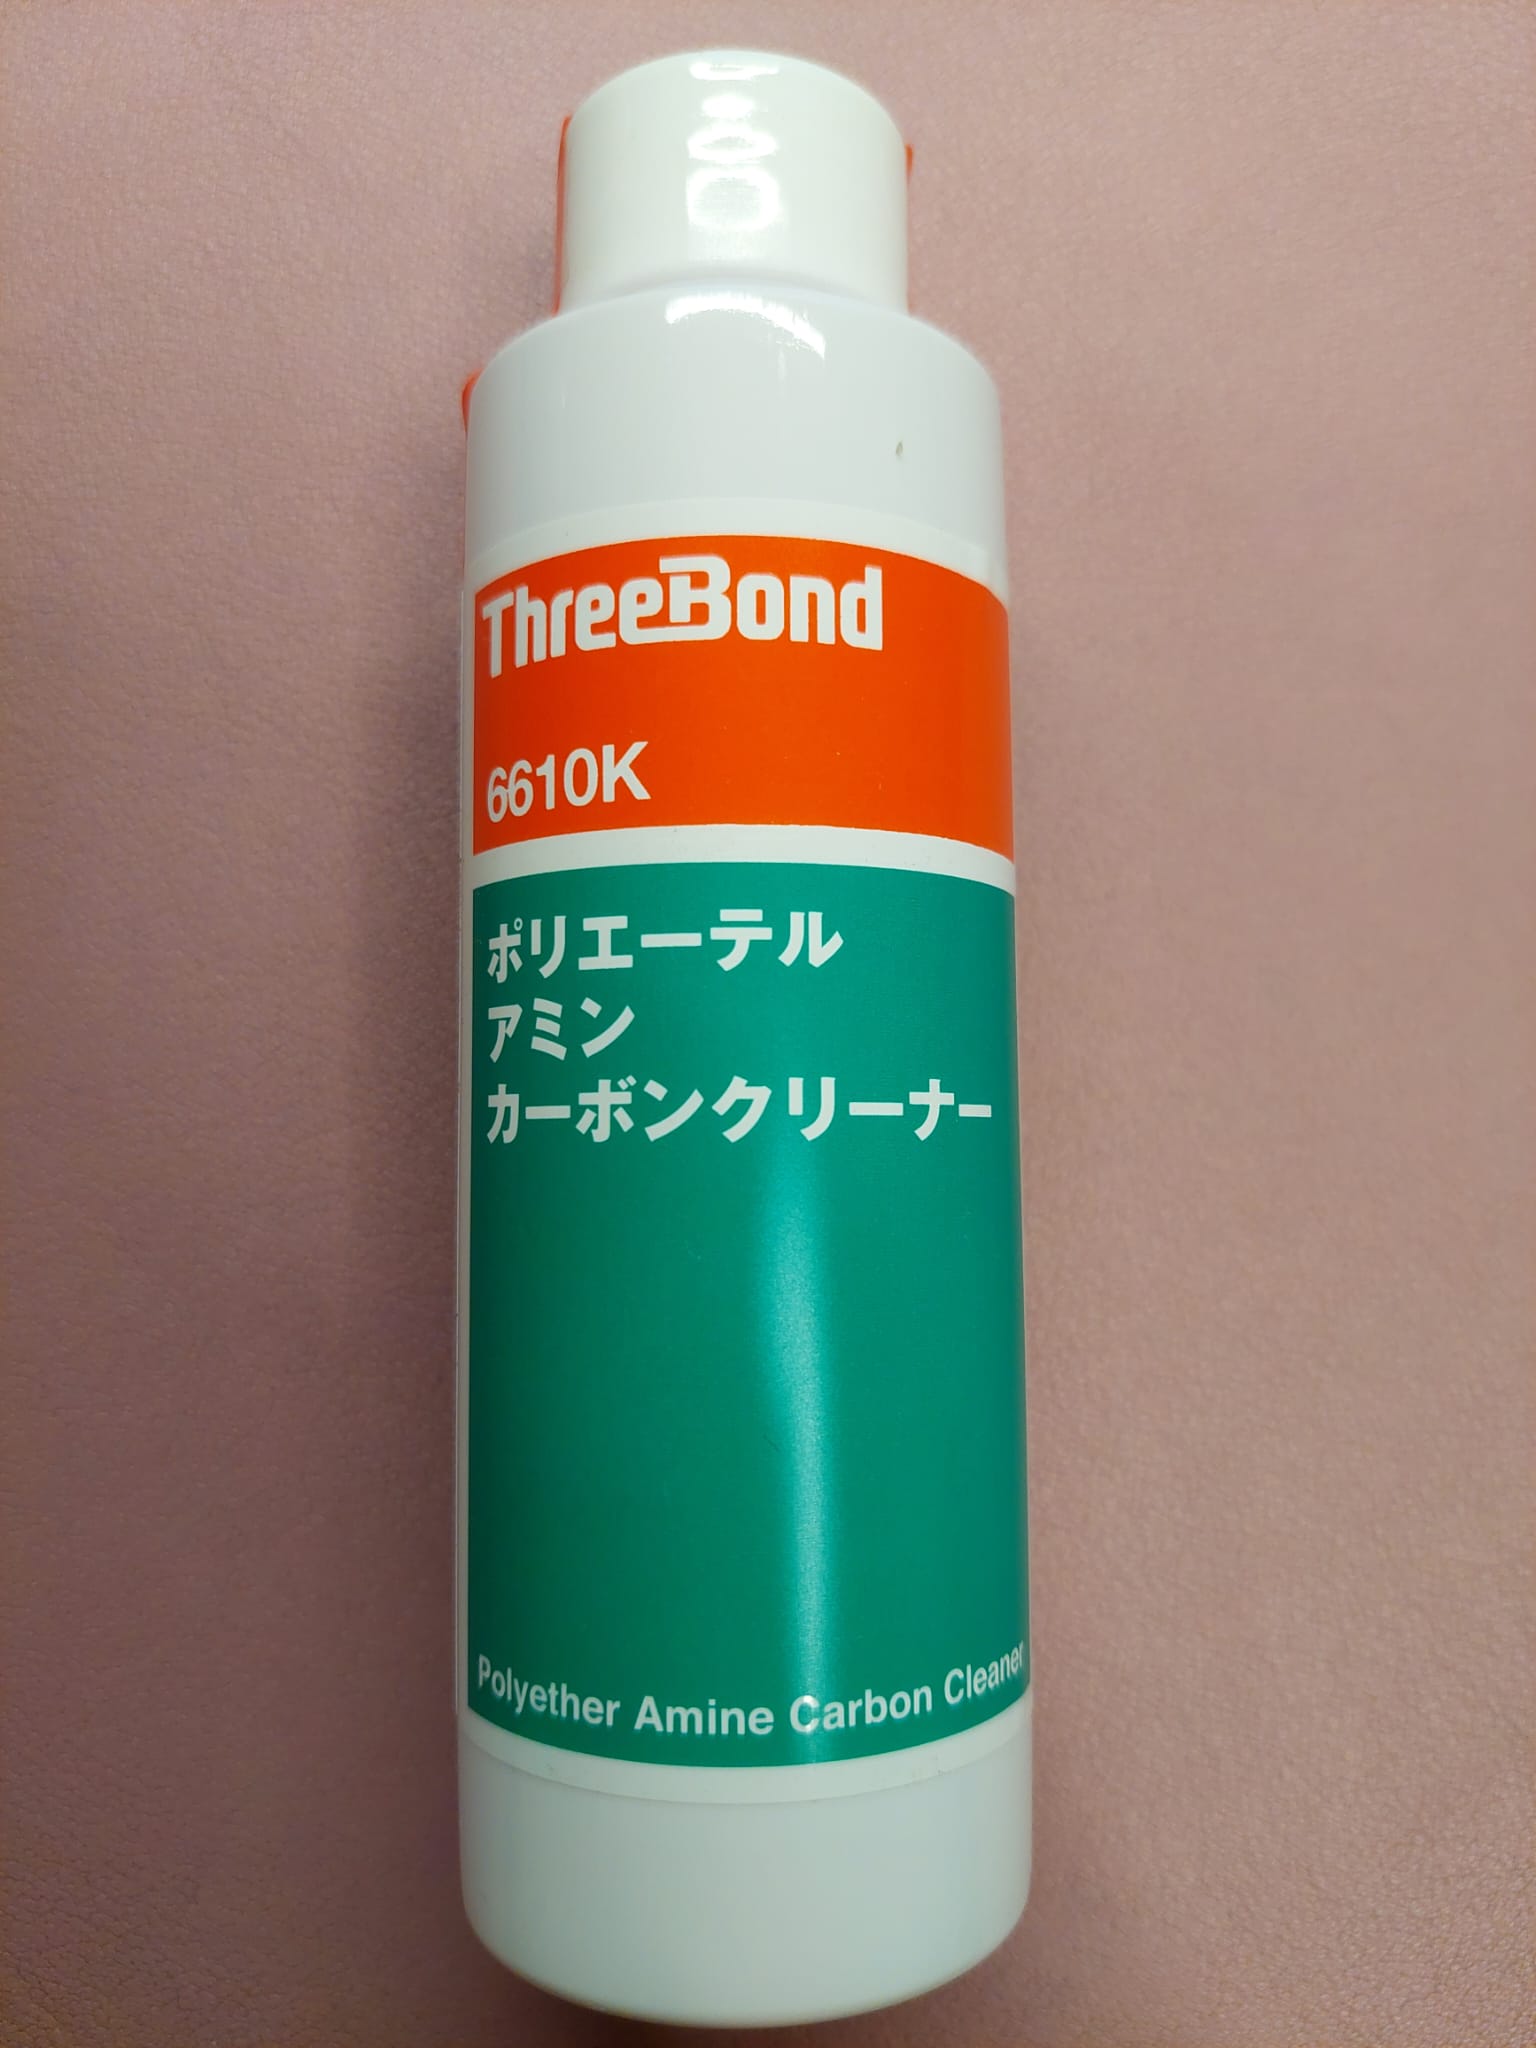 ThreeBond Polyether Amine Carbon Cleaner 120ml